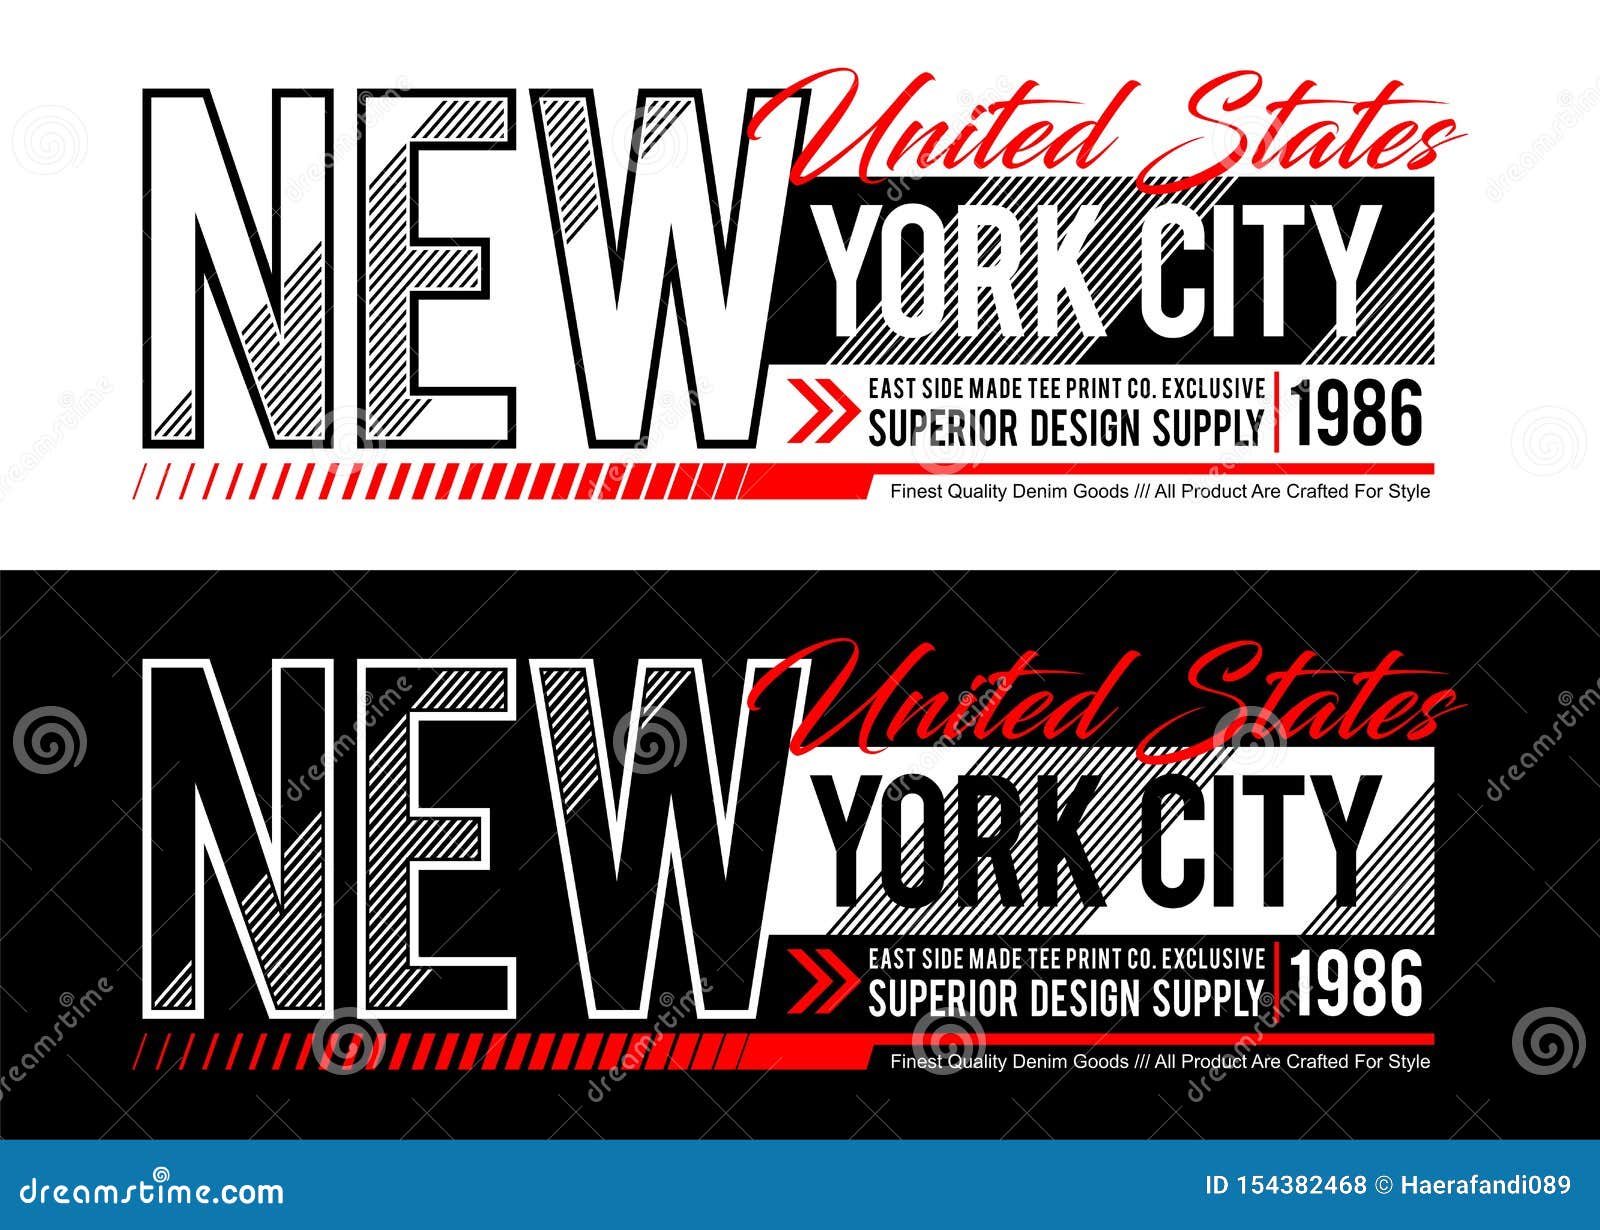 Design Graphic, New York City Tee T-shirt Print, Urban Style, Vector ...